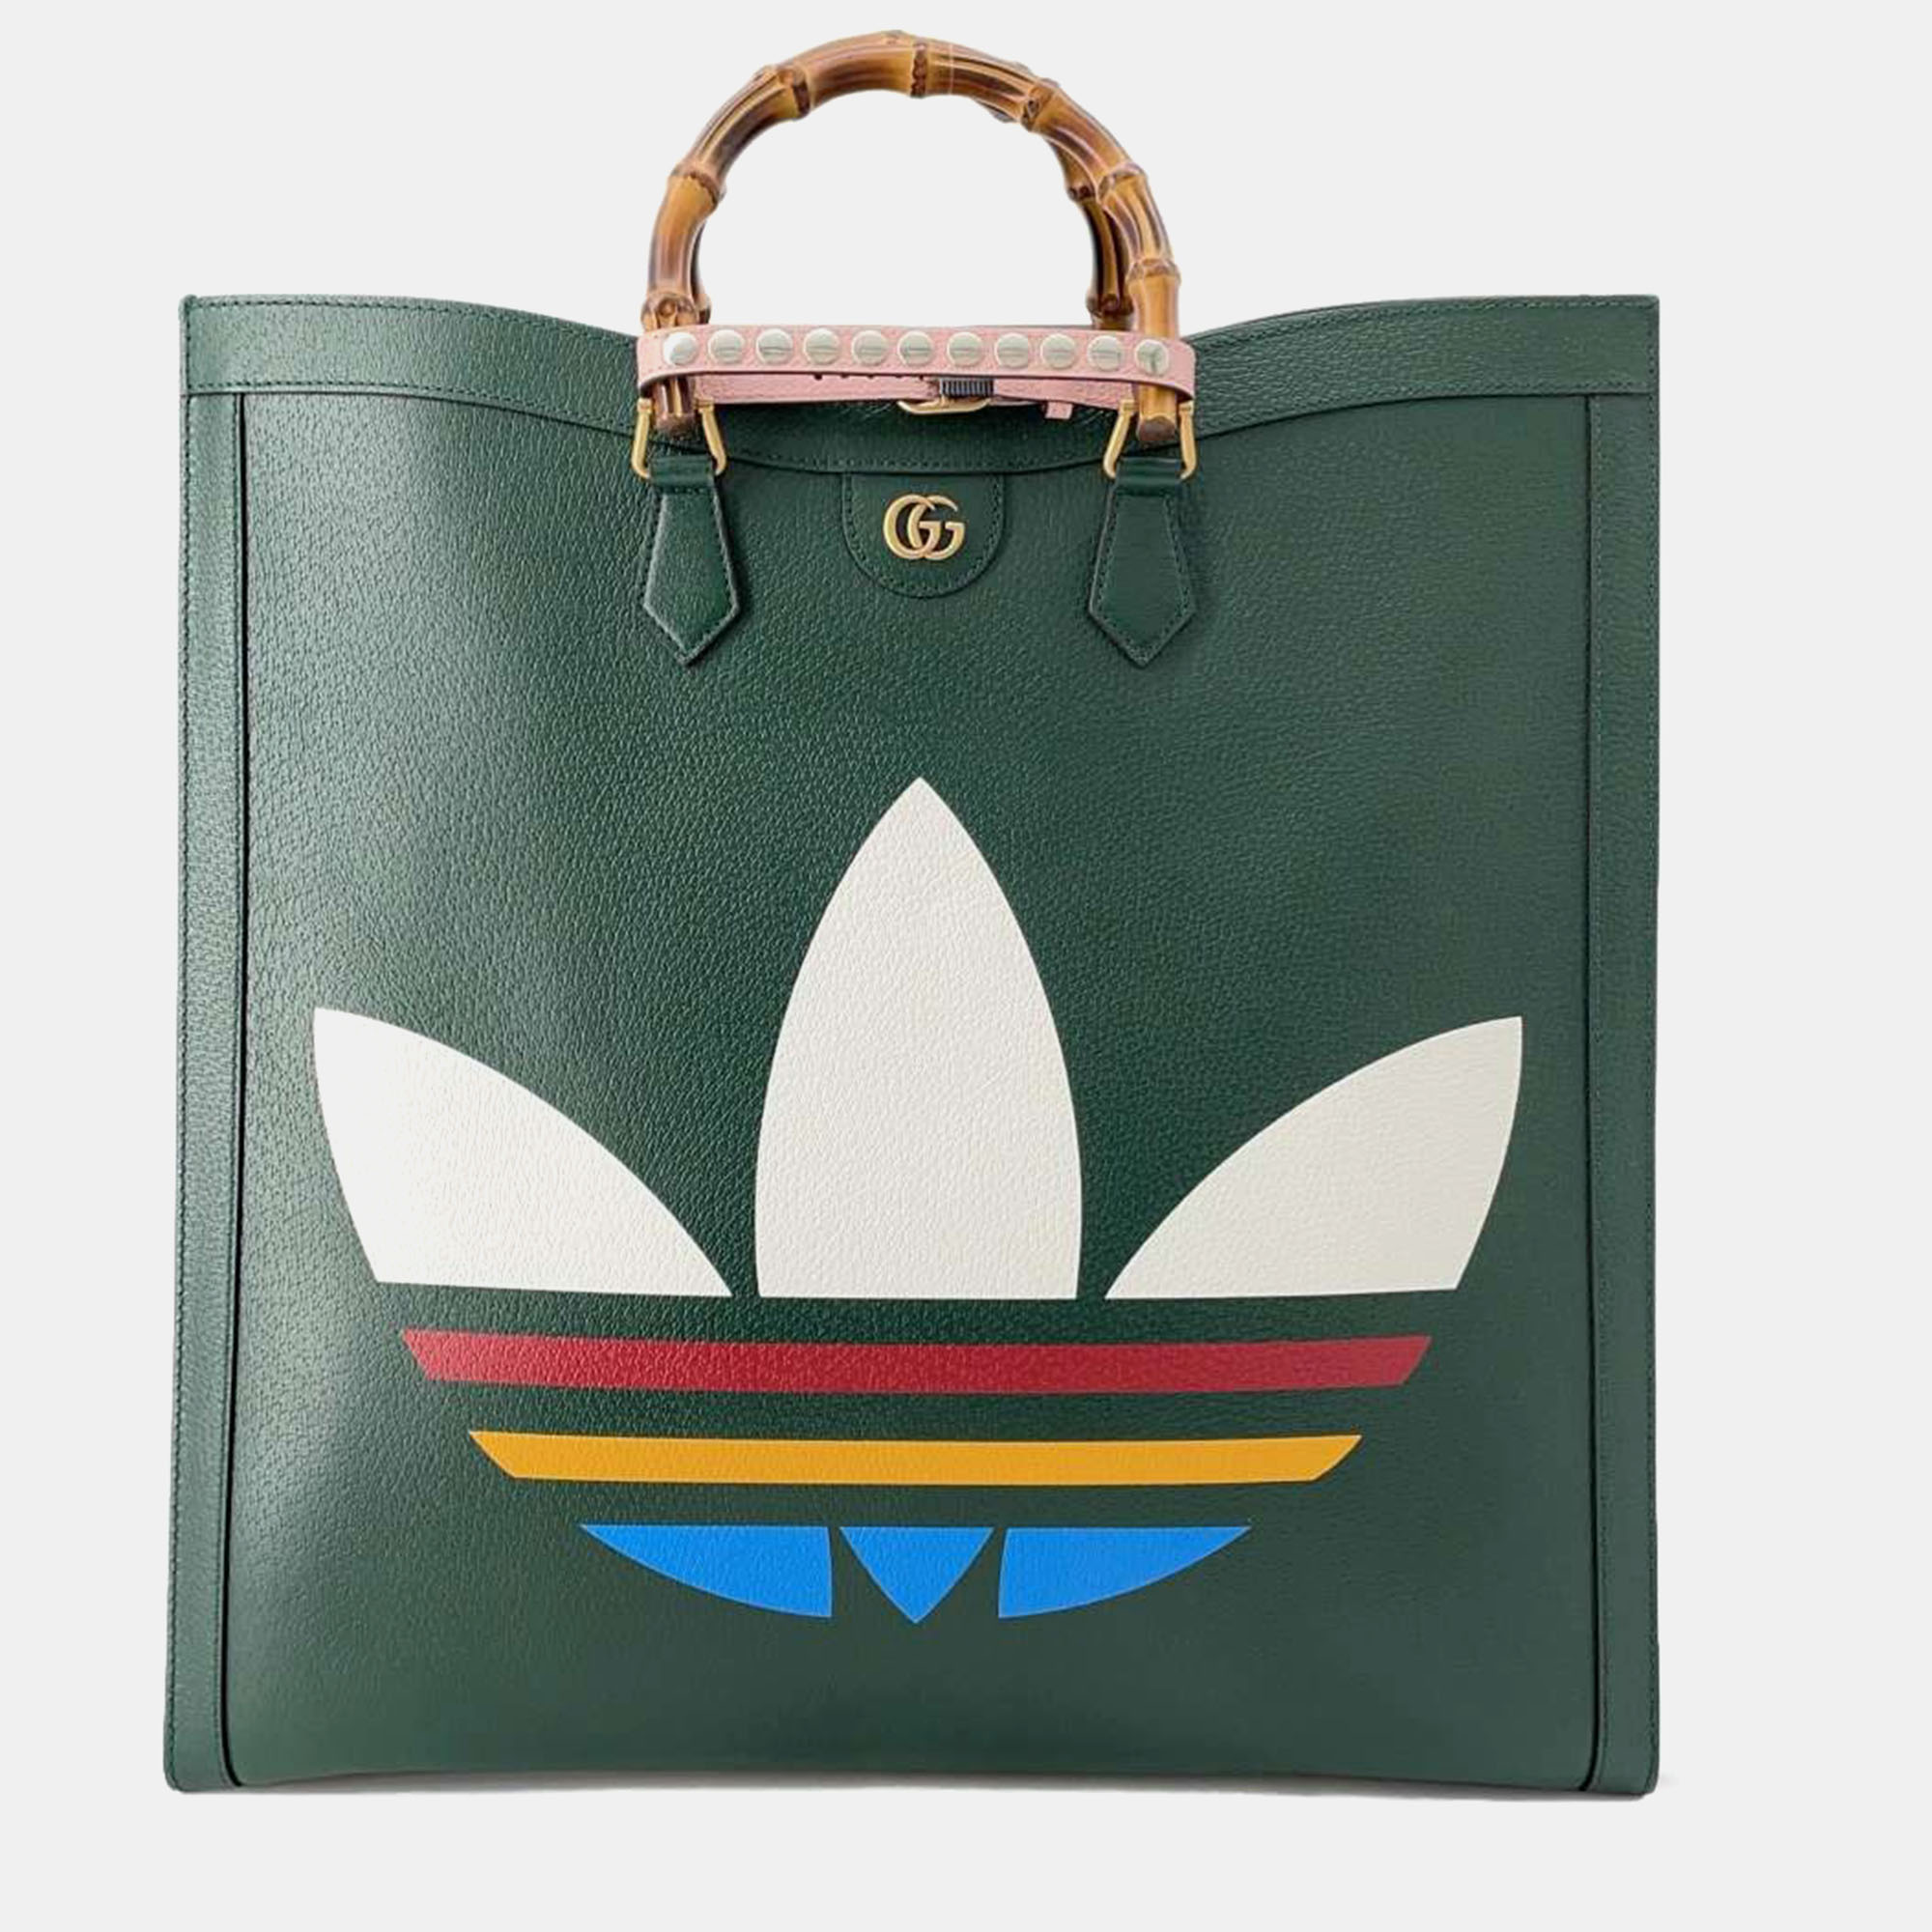 Gucci x adidas green leather diana maxi tote bag